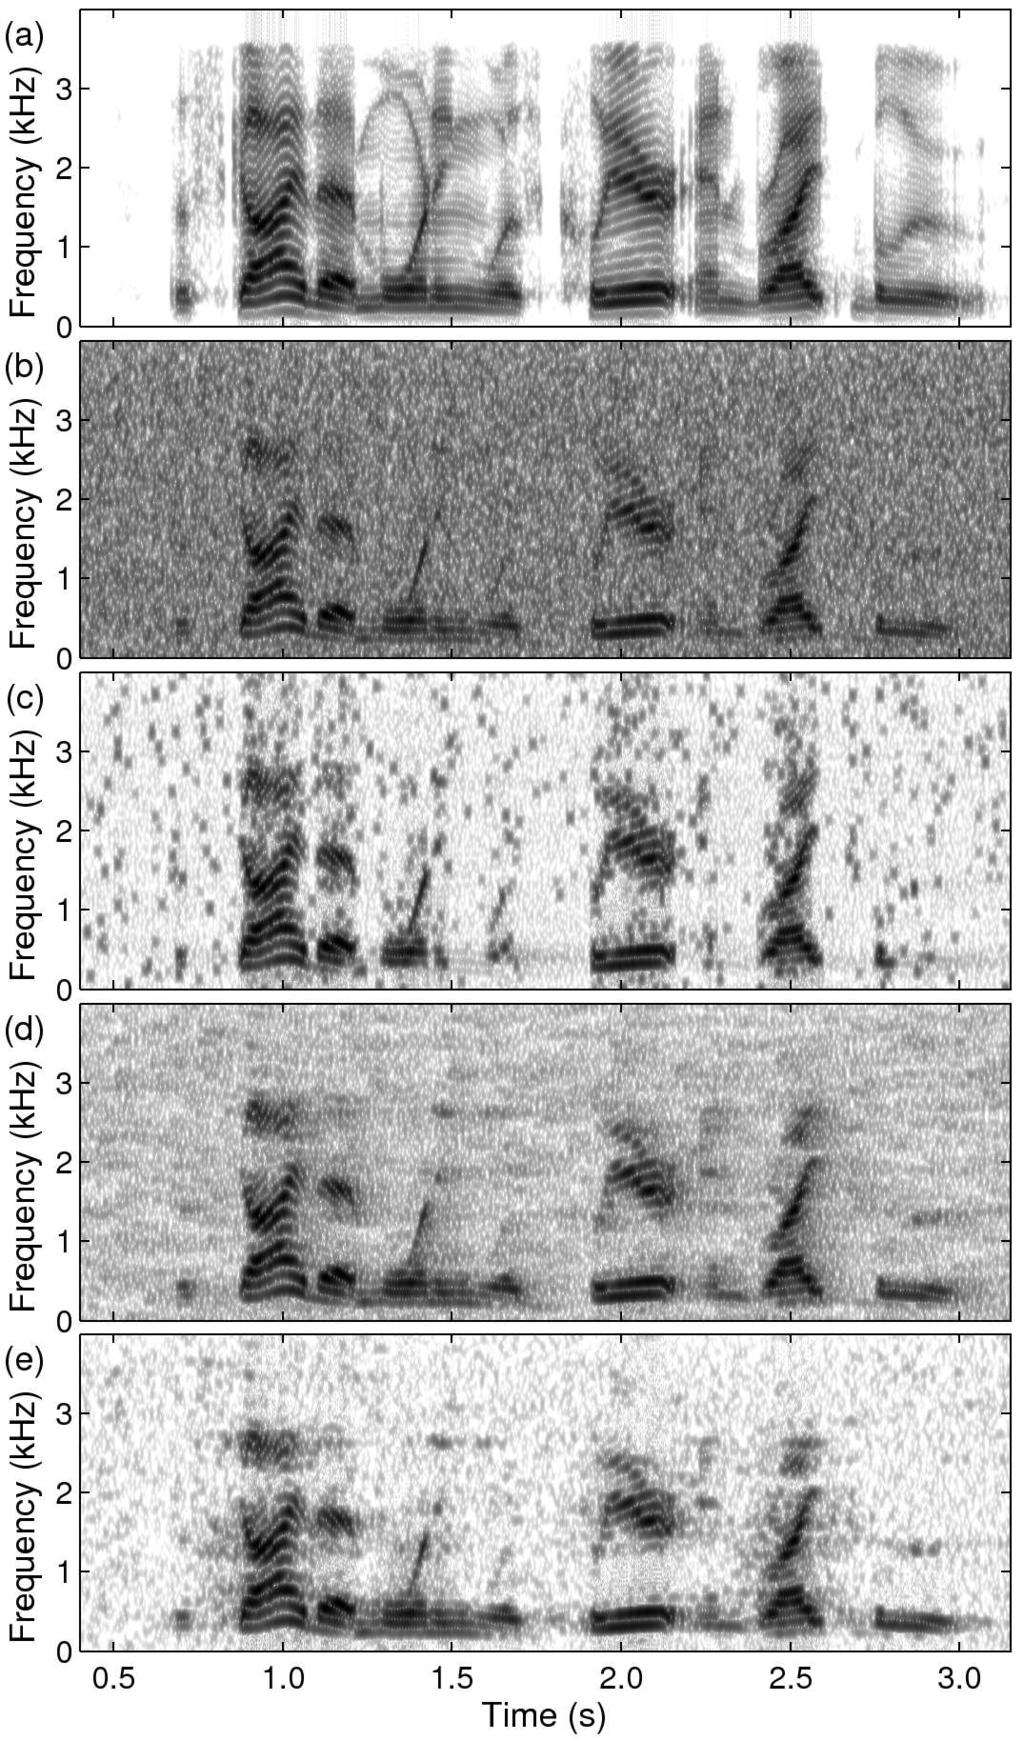 Fig. 3: Spectrograms of sp10 utterance, The sky that morning speech corpus: (a) clean speech (PESQ: 4.50); (b) speech degraded by AWGN at 5 db SNR (PESQ: 1.